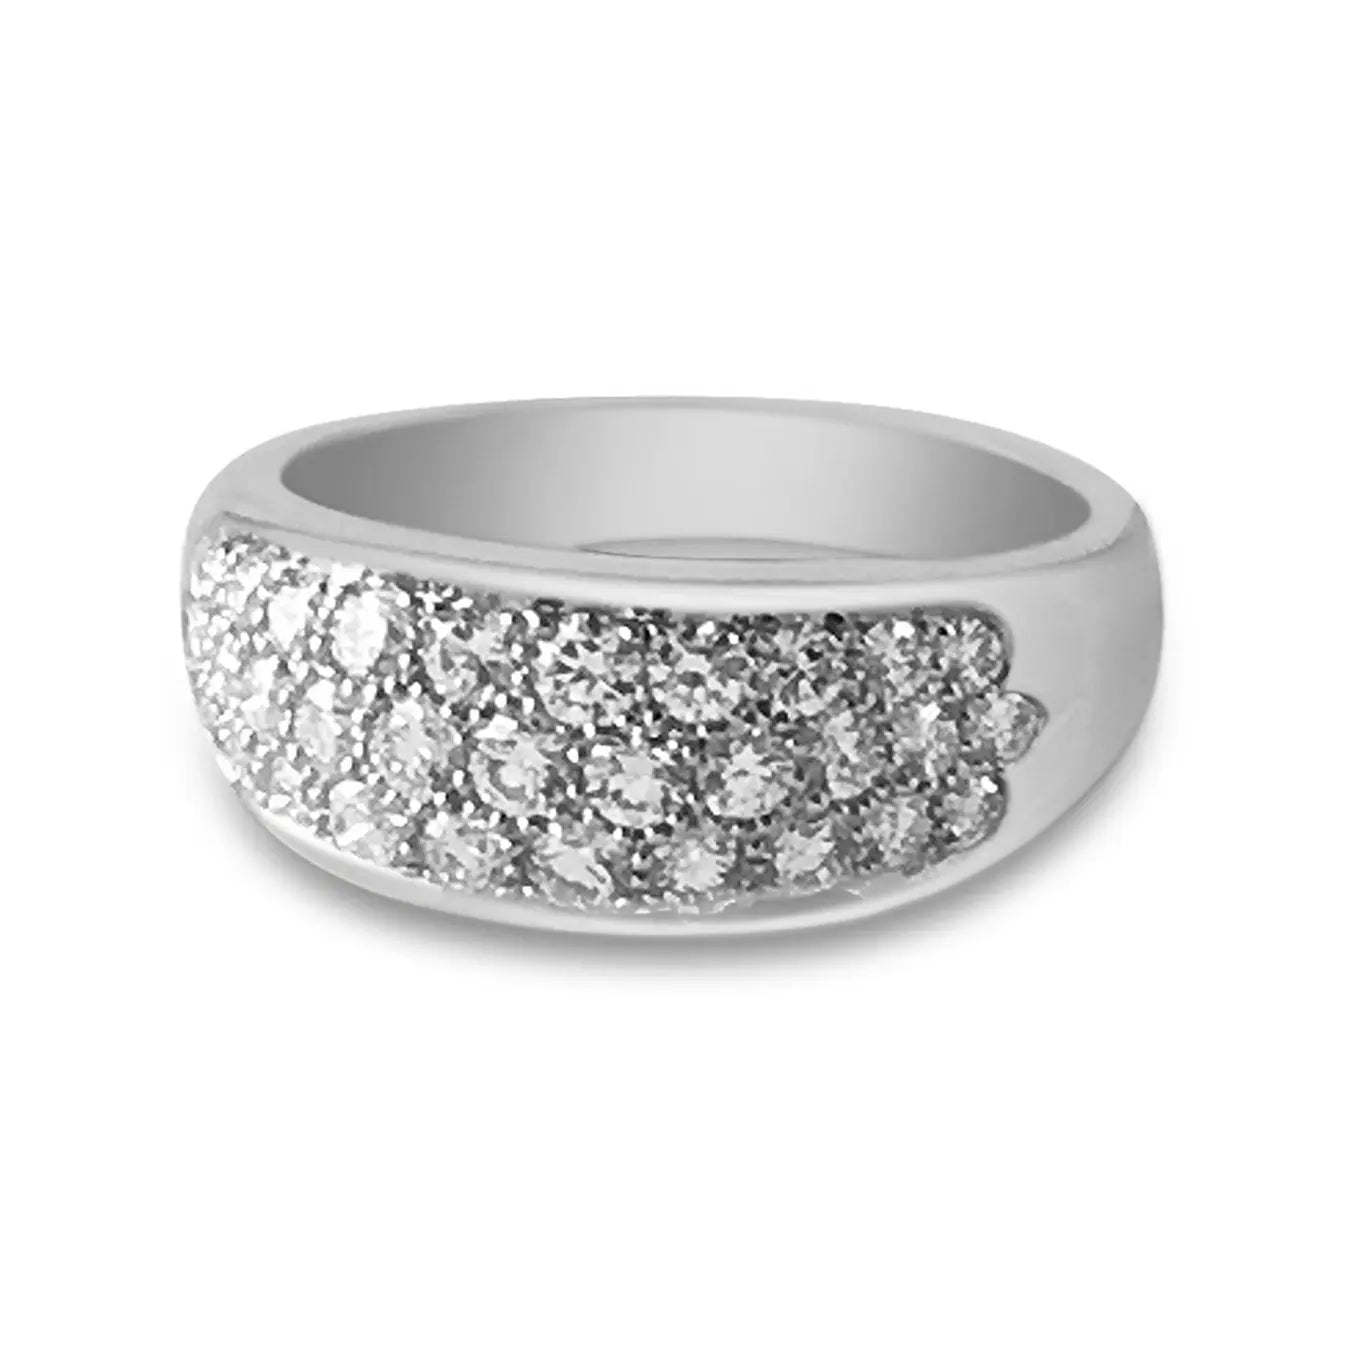 Pave Diamond Band Ring in Platinum - Squash Blossom Vail